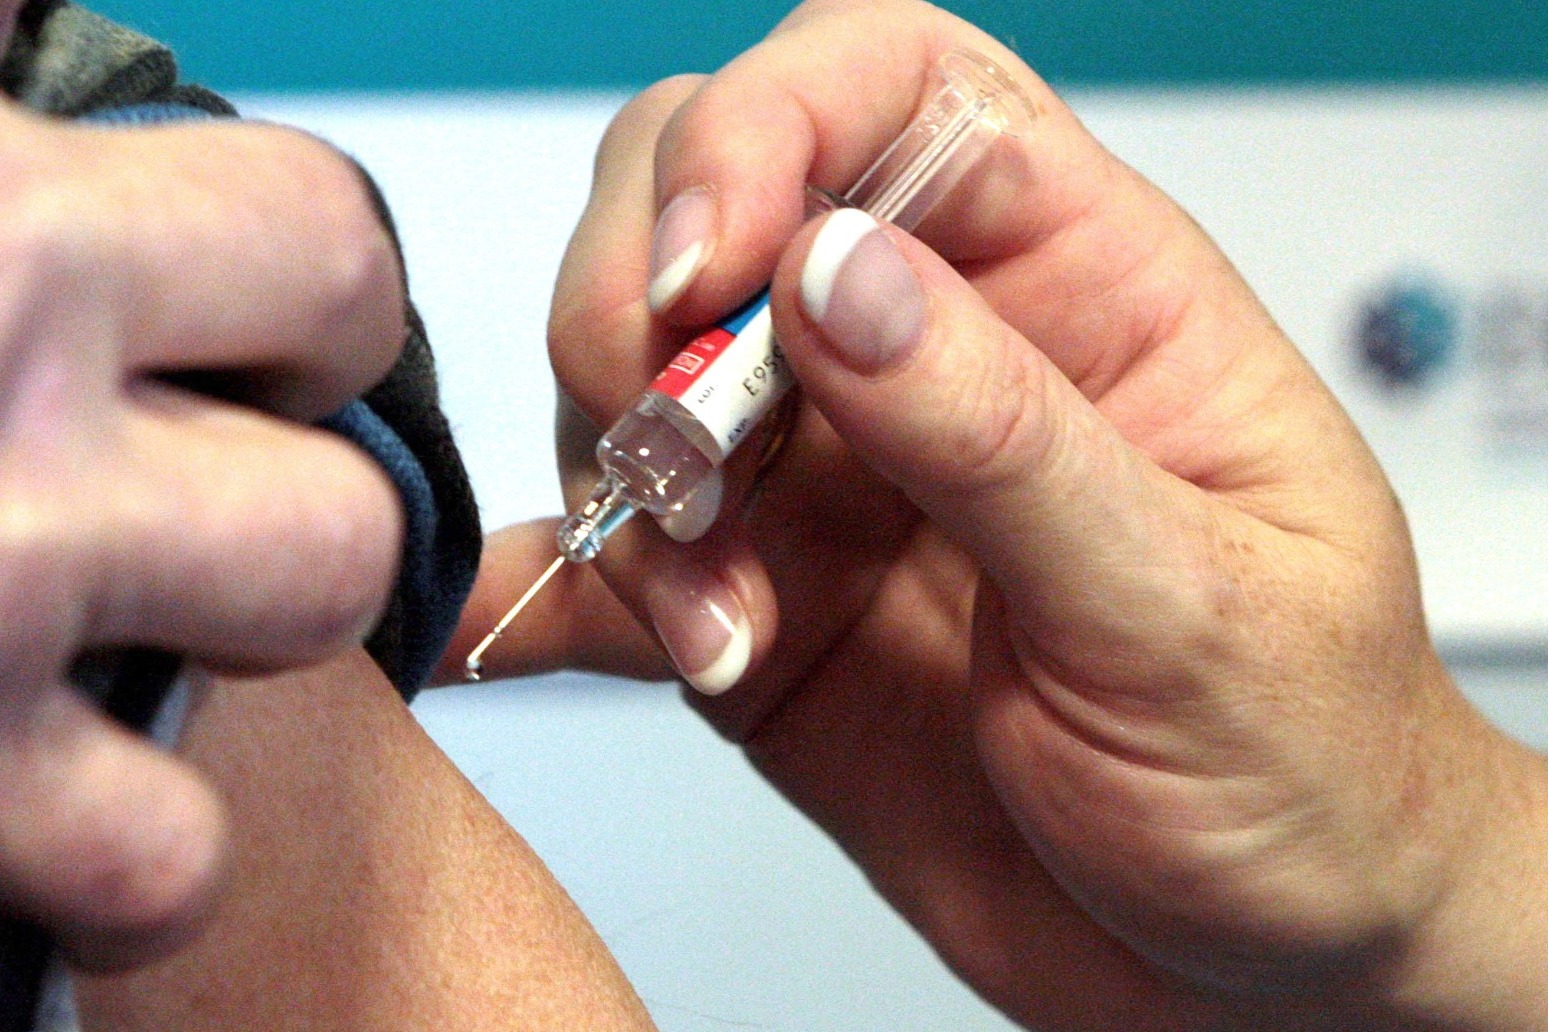 UK secures 60 million doses of potential coronavirus vaccine 